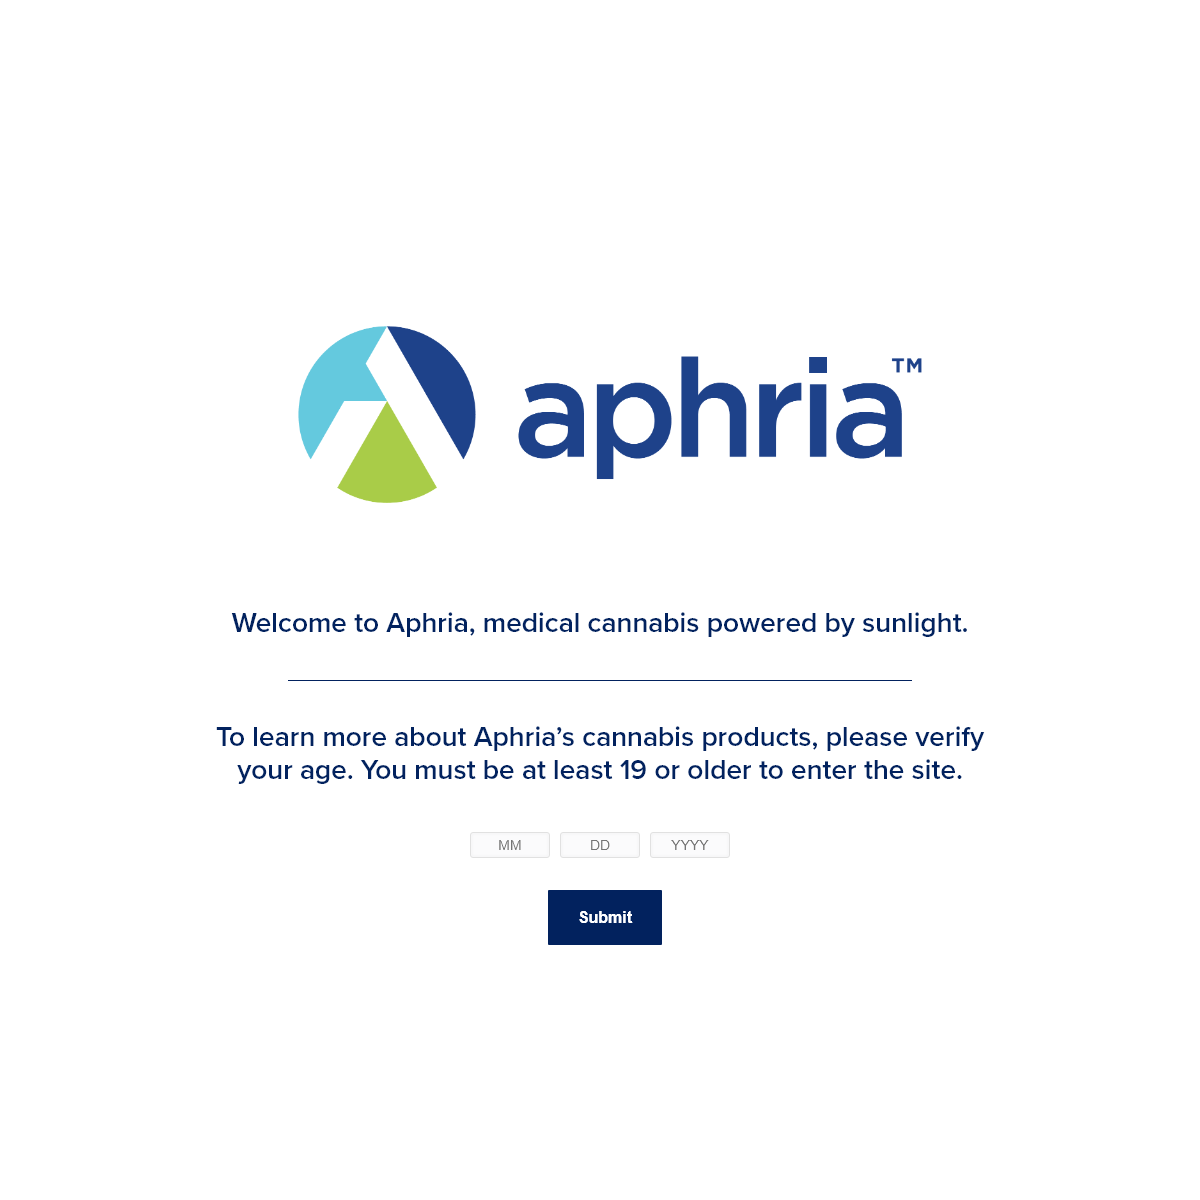 A complete backup of aphria.com